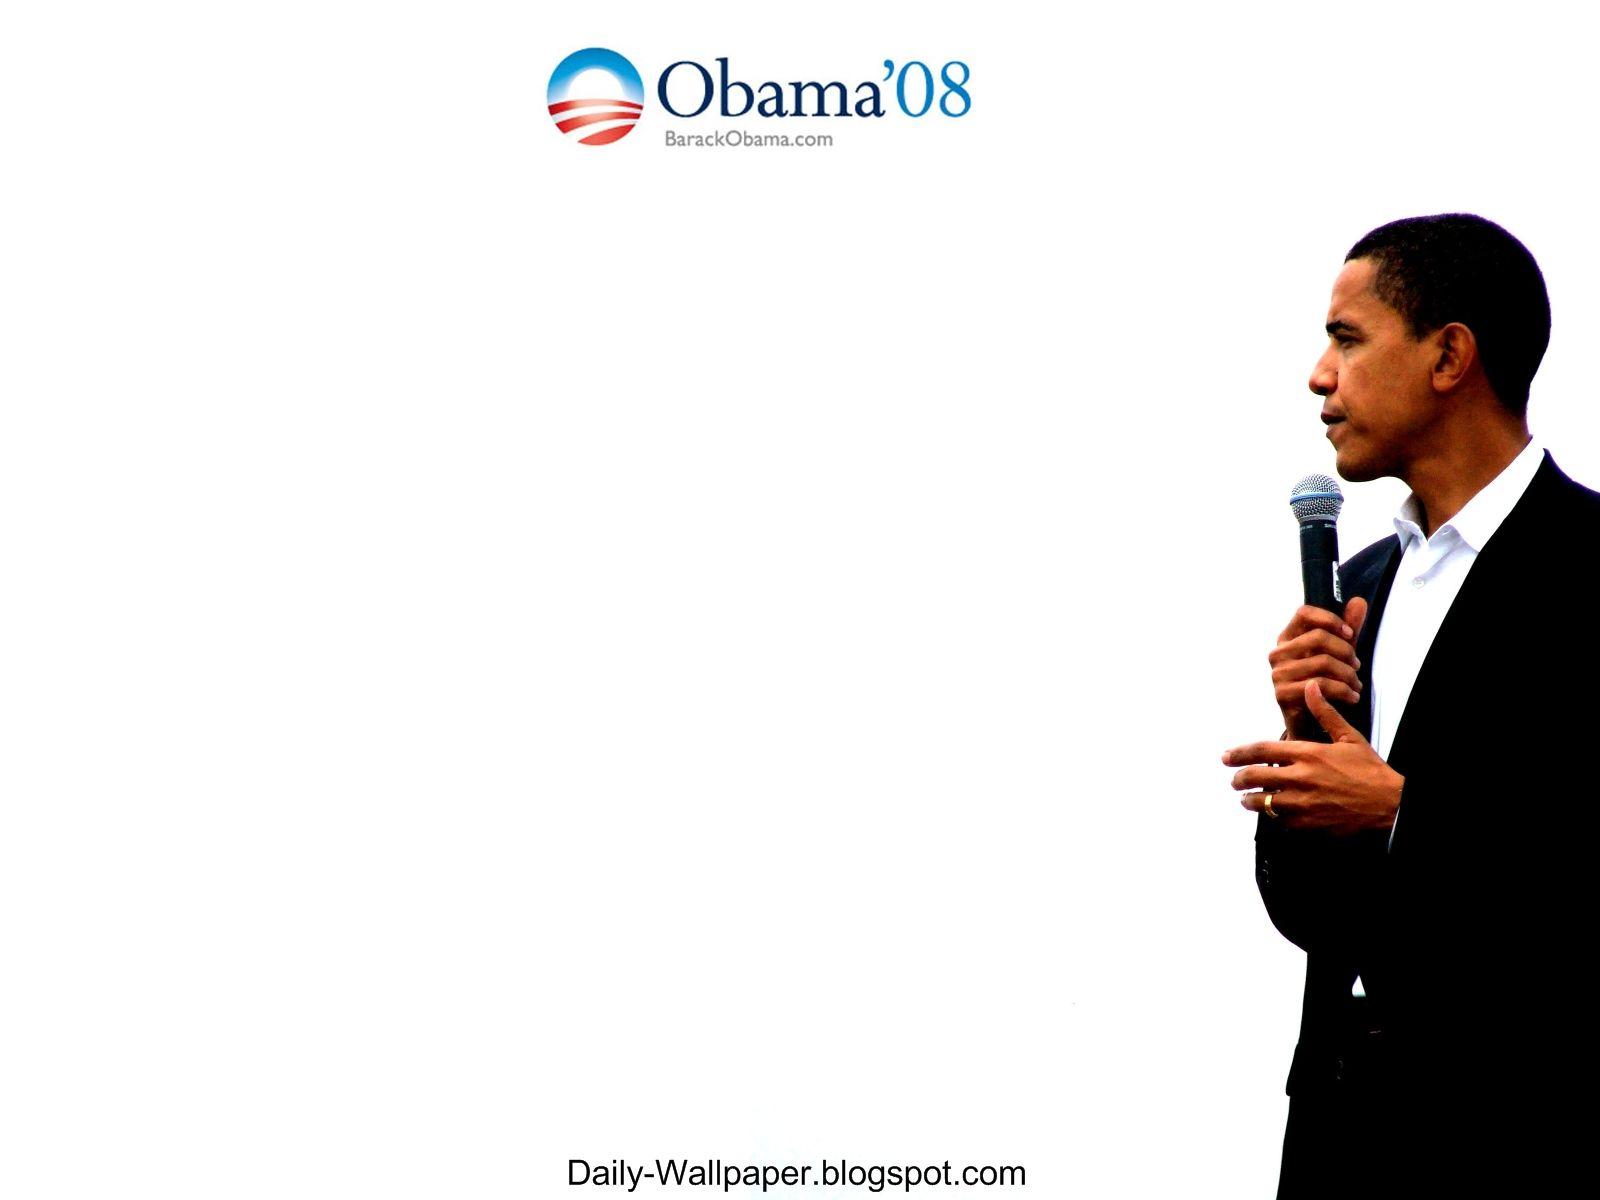 Obama Wallpaper Wallpaper (9831) ilikewalls